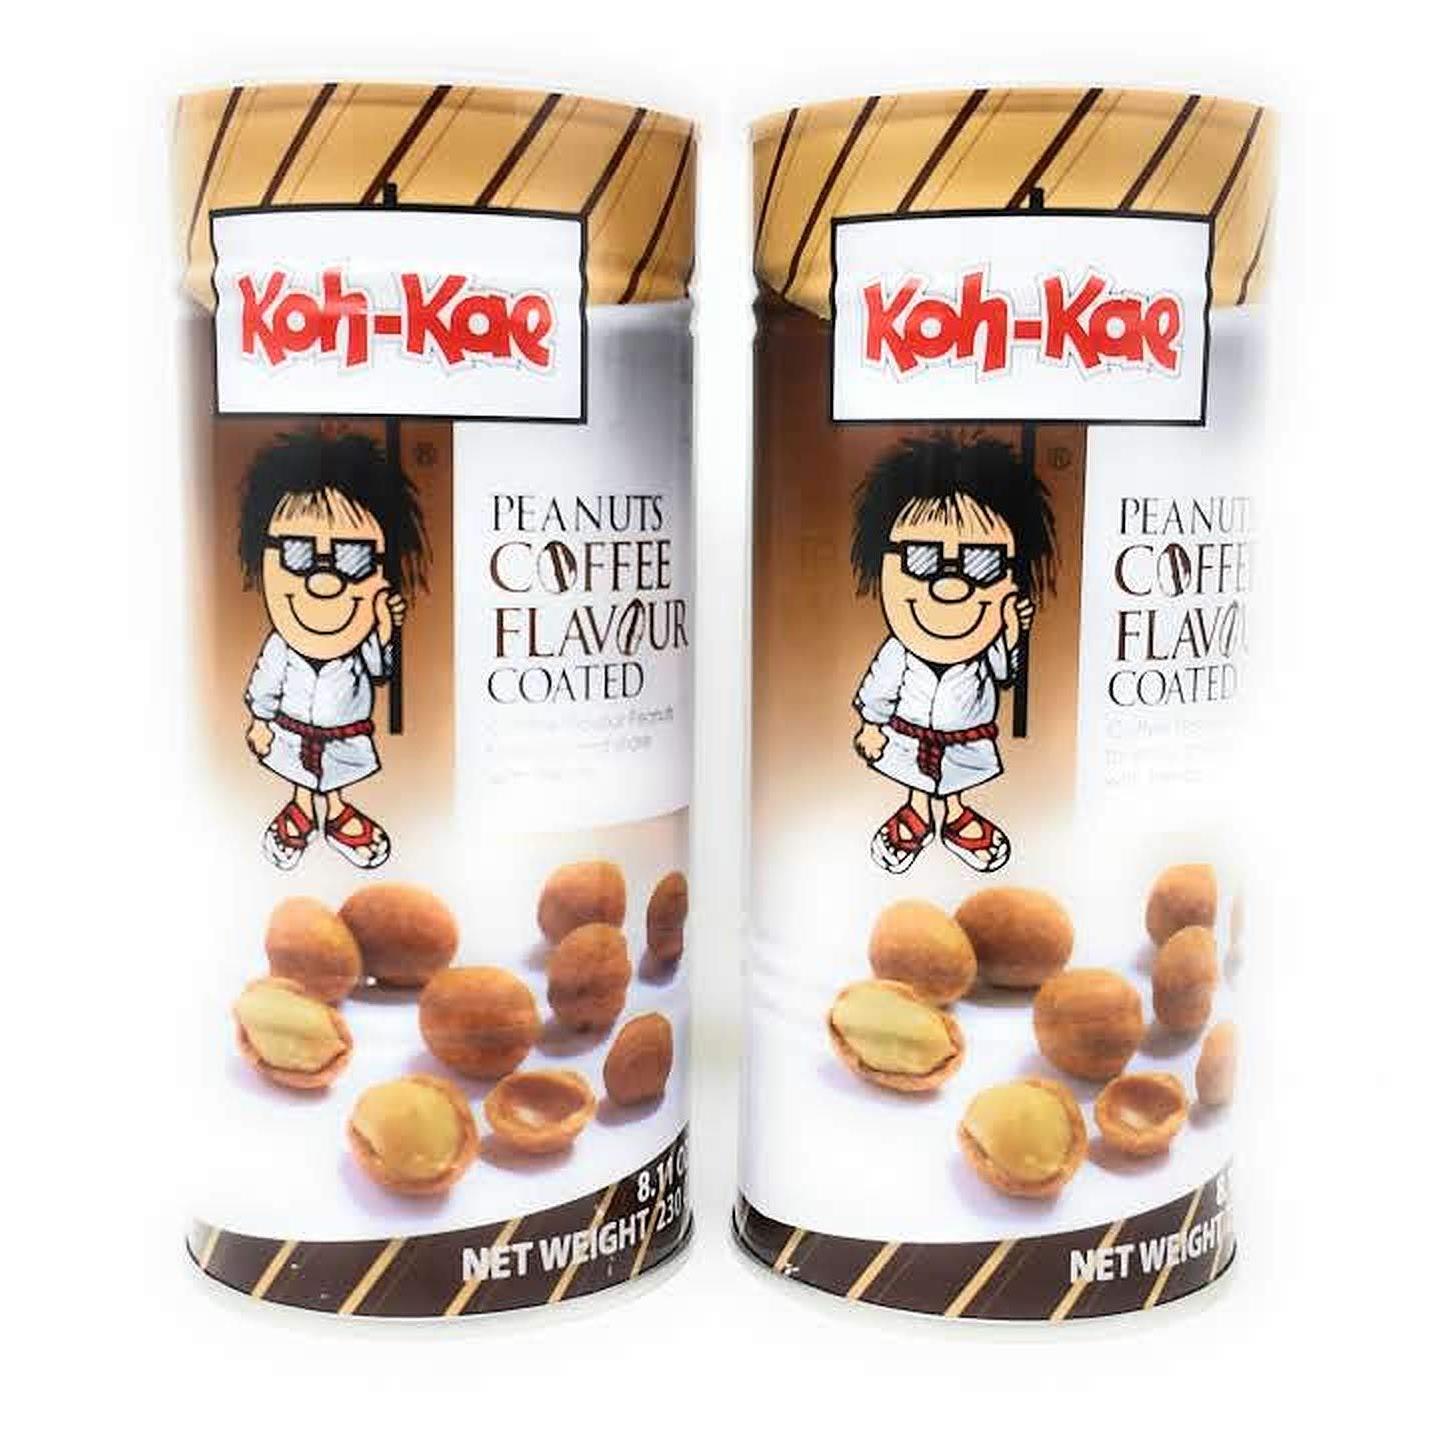 Koh-Kae Peanuts Coffee Flavoured Coated 8.11oz (230g), 2 Pack